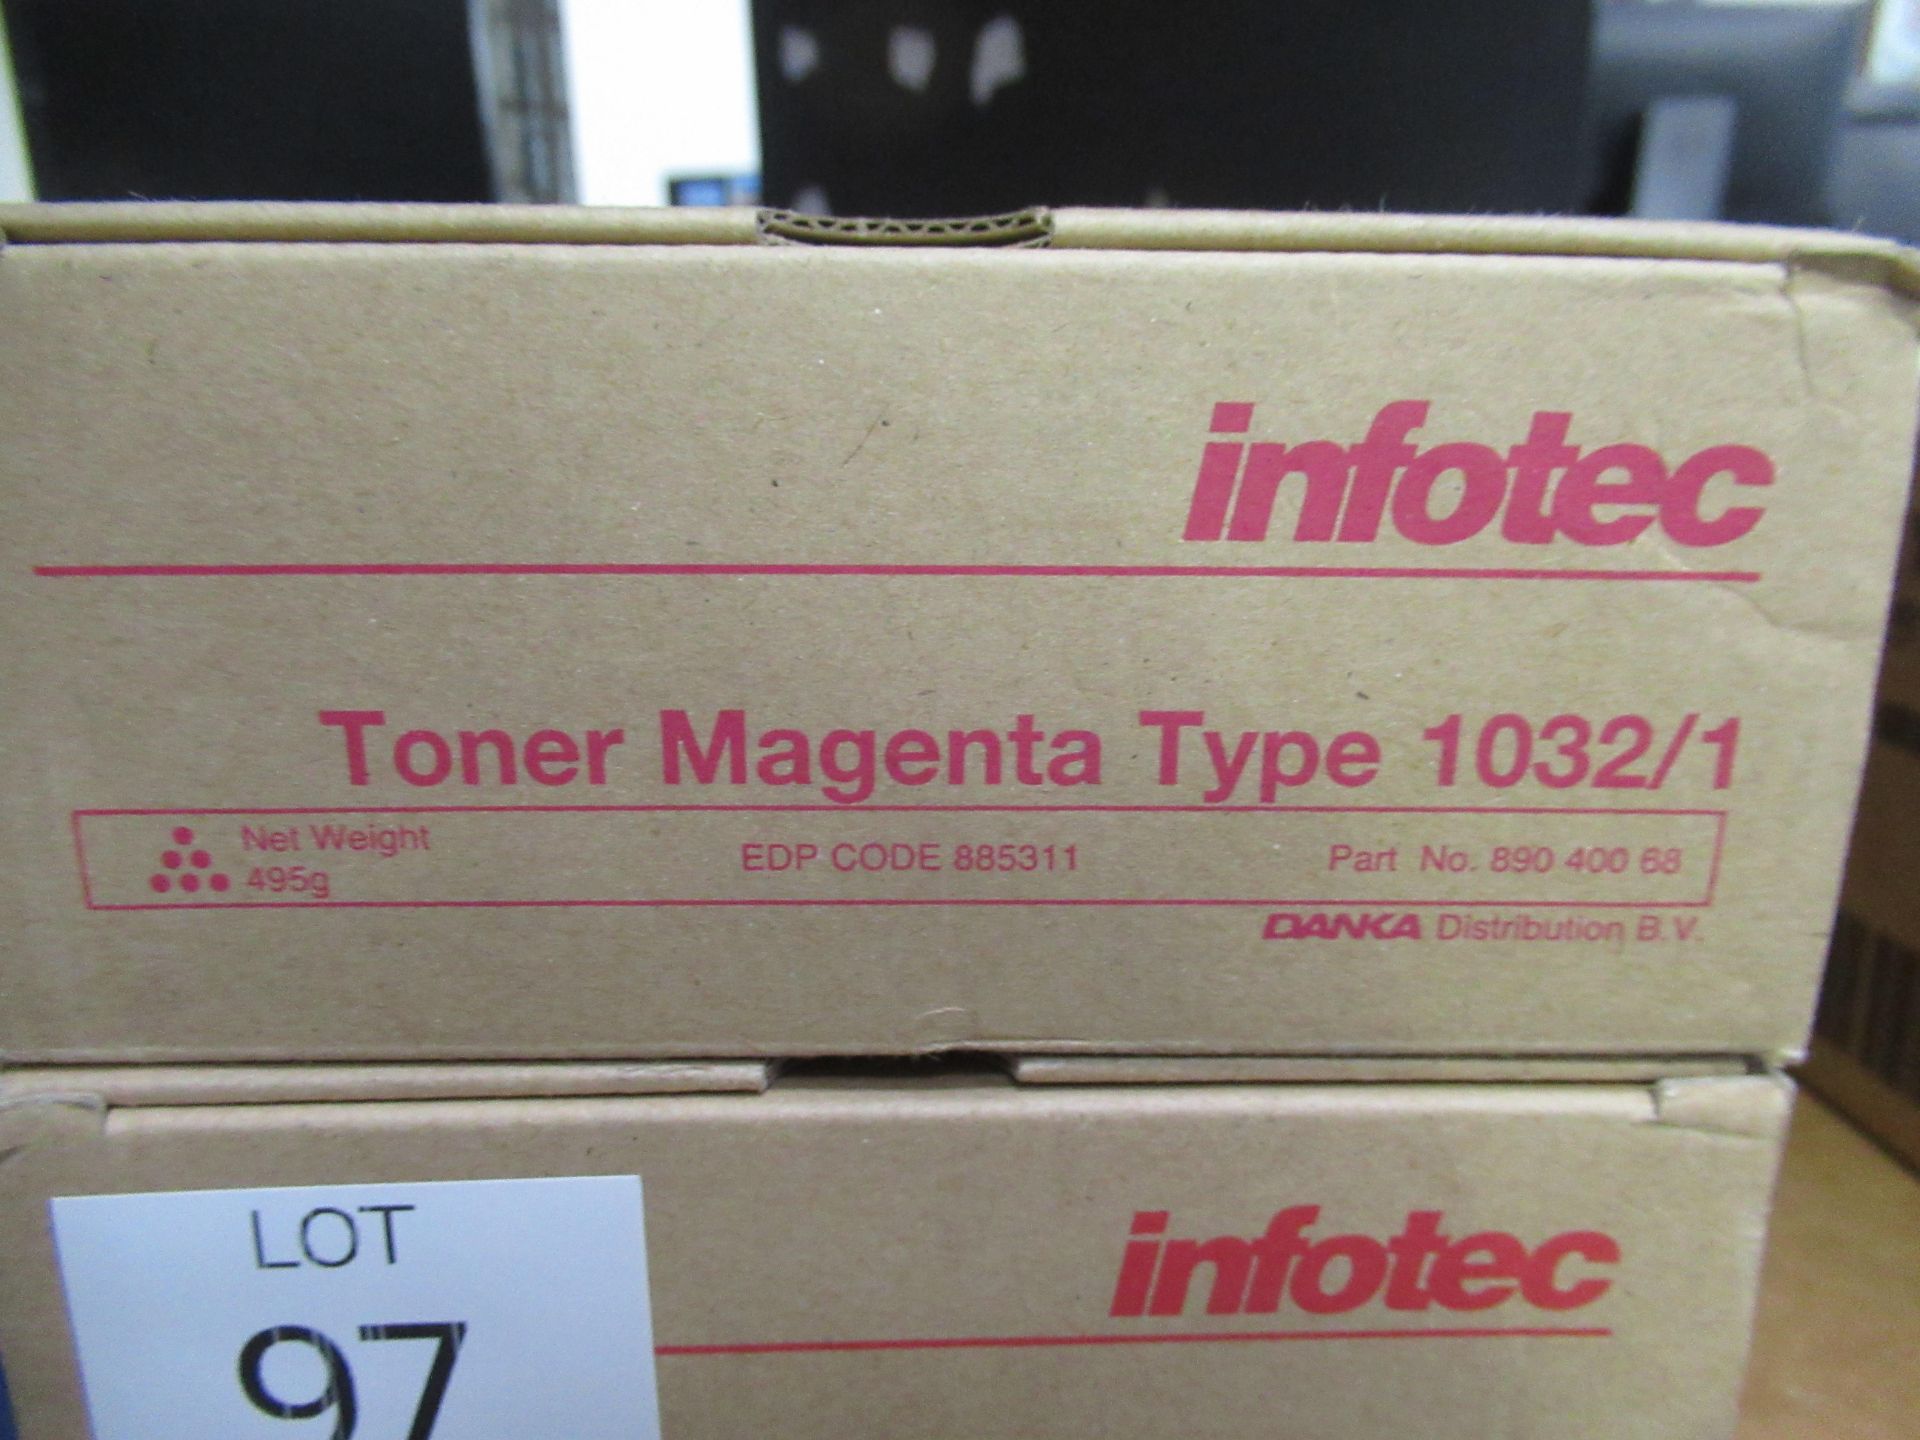 6x Infotec 1032/1 toner cartridges - Image 2 of 4